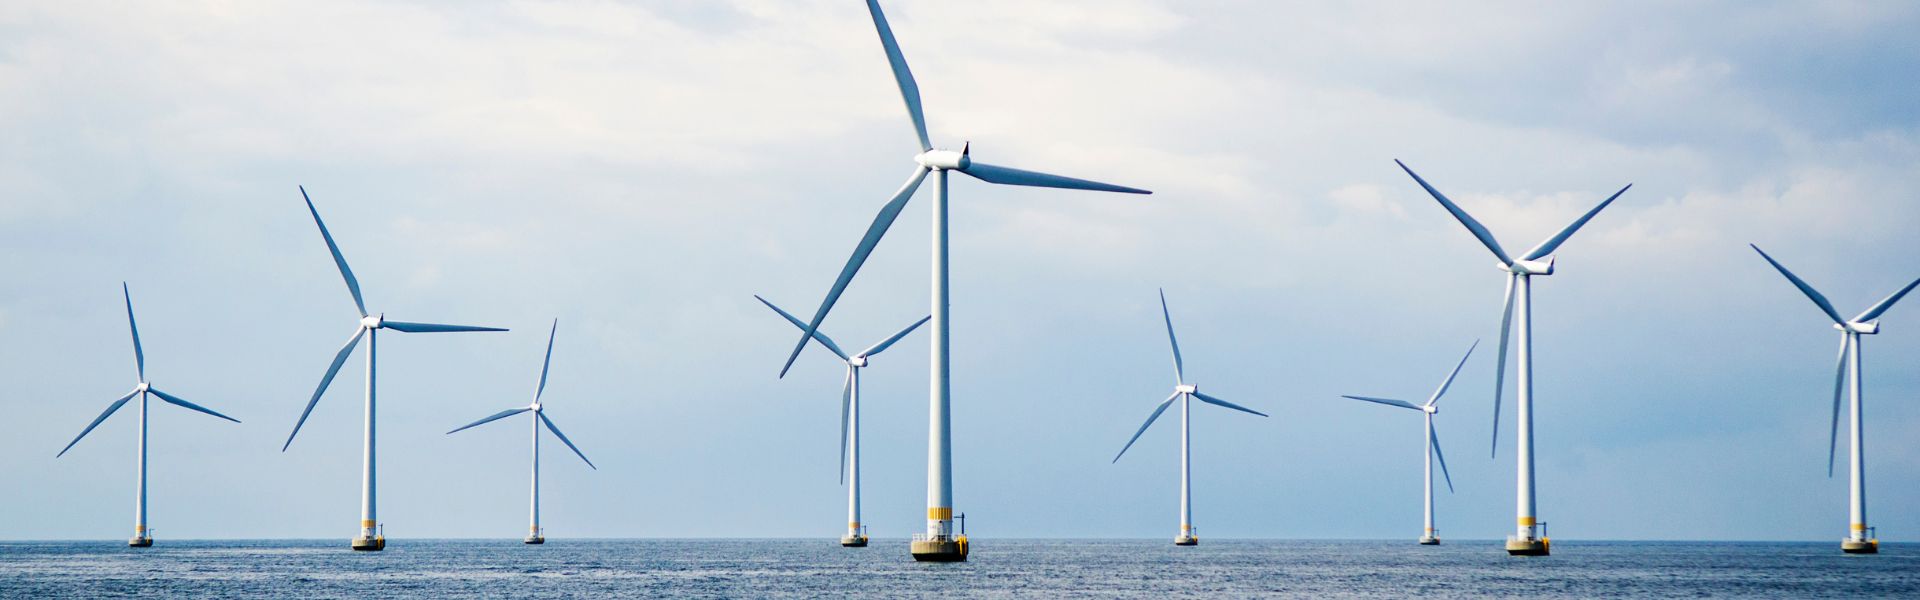 Offshore wind farm on Swedish coast